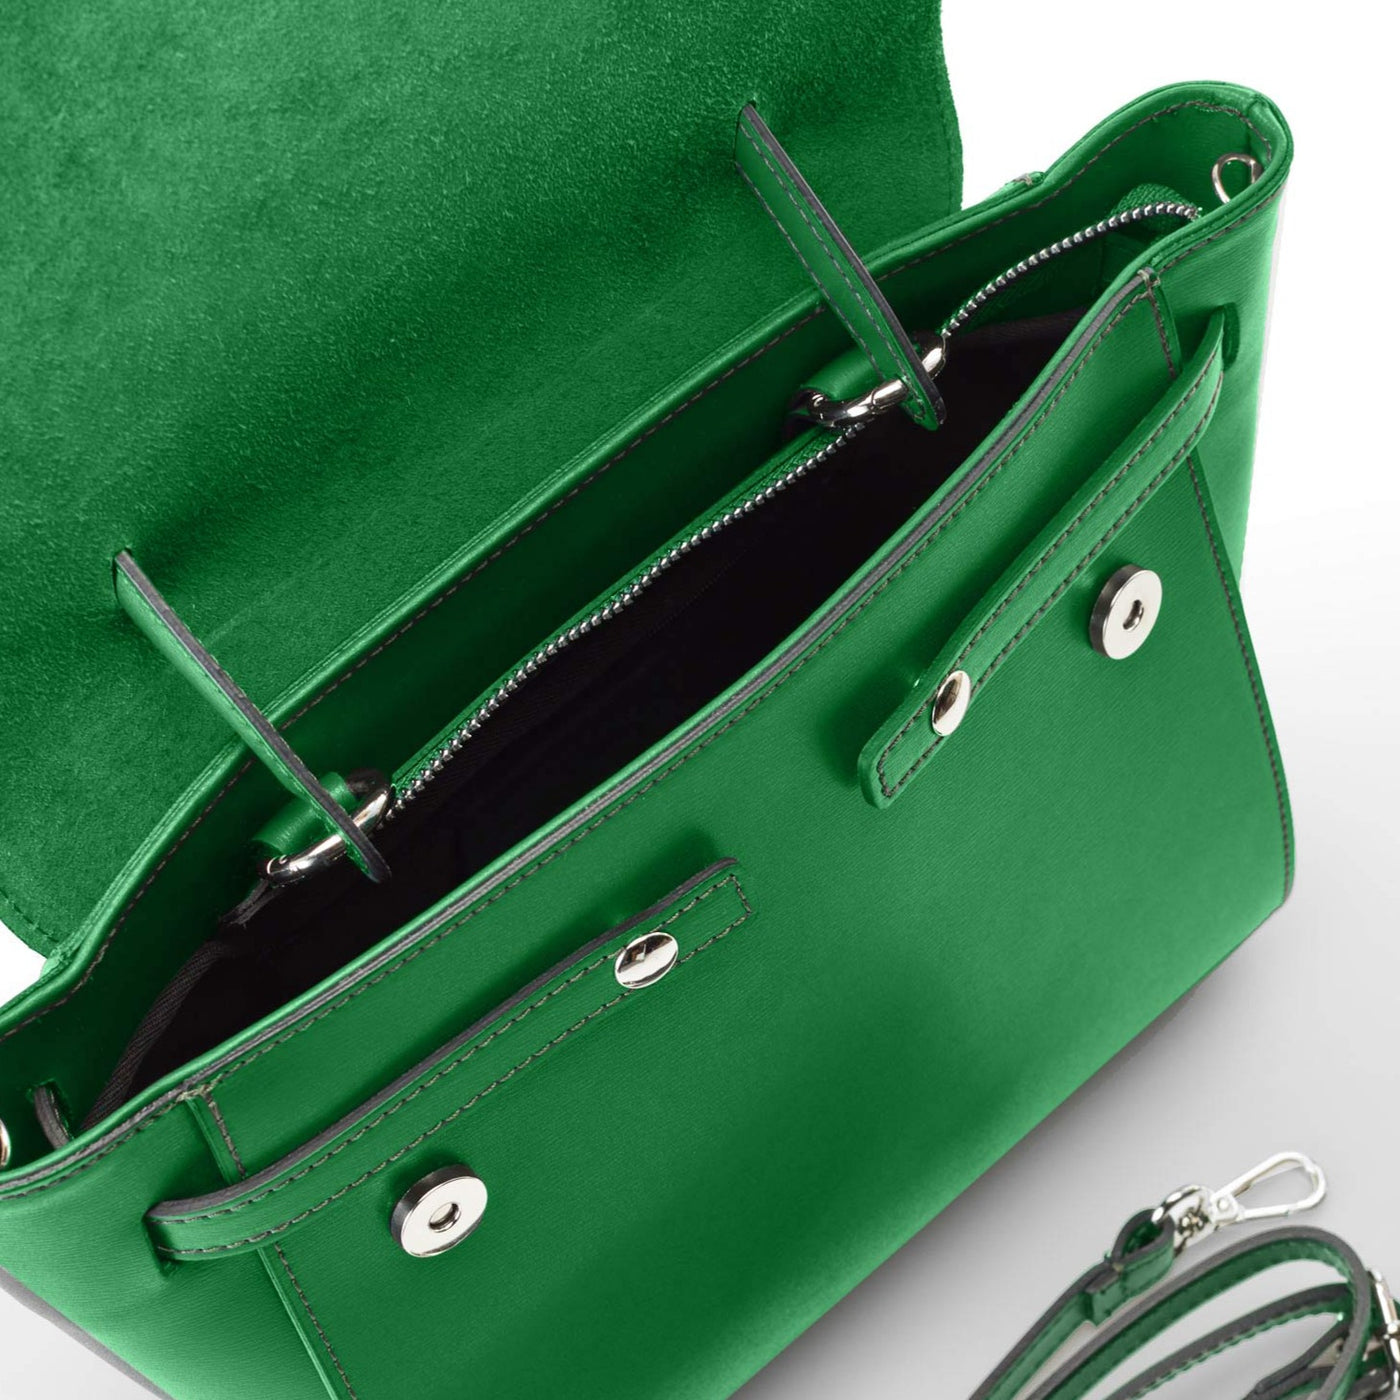 Leather bag "Arezzo", Light green